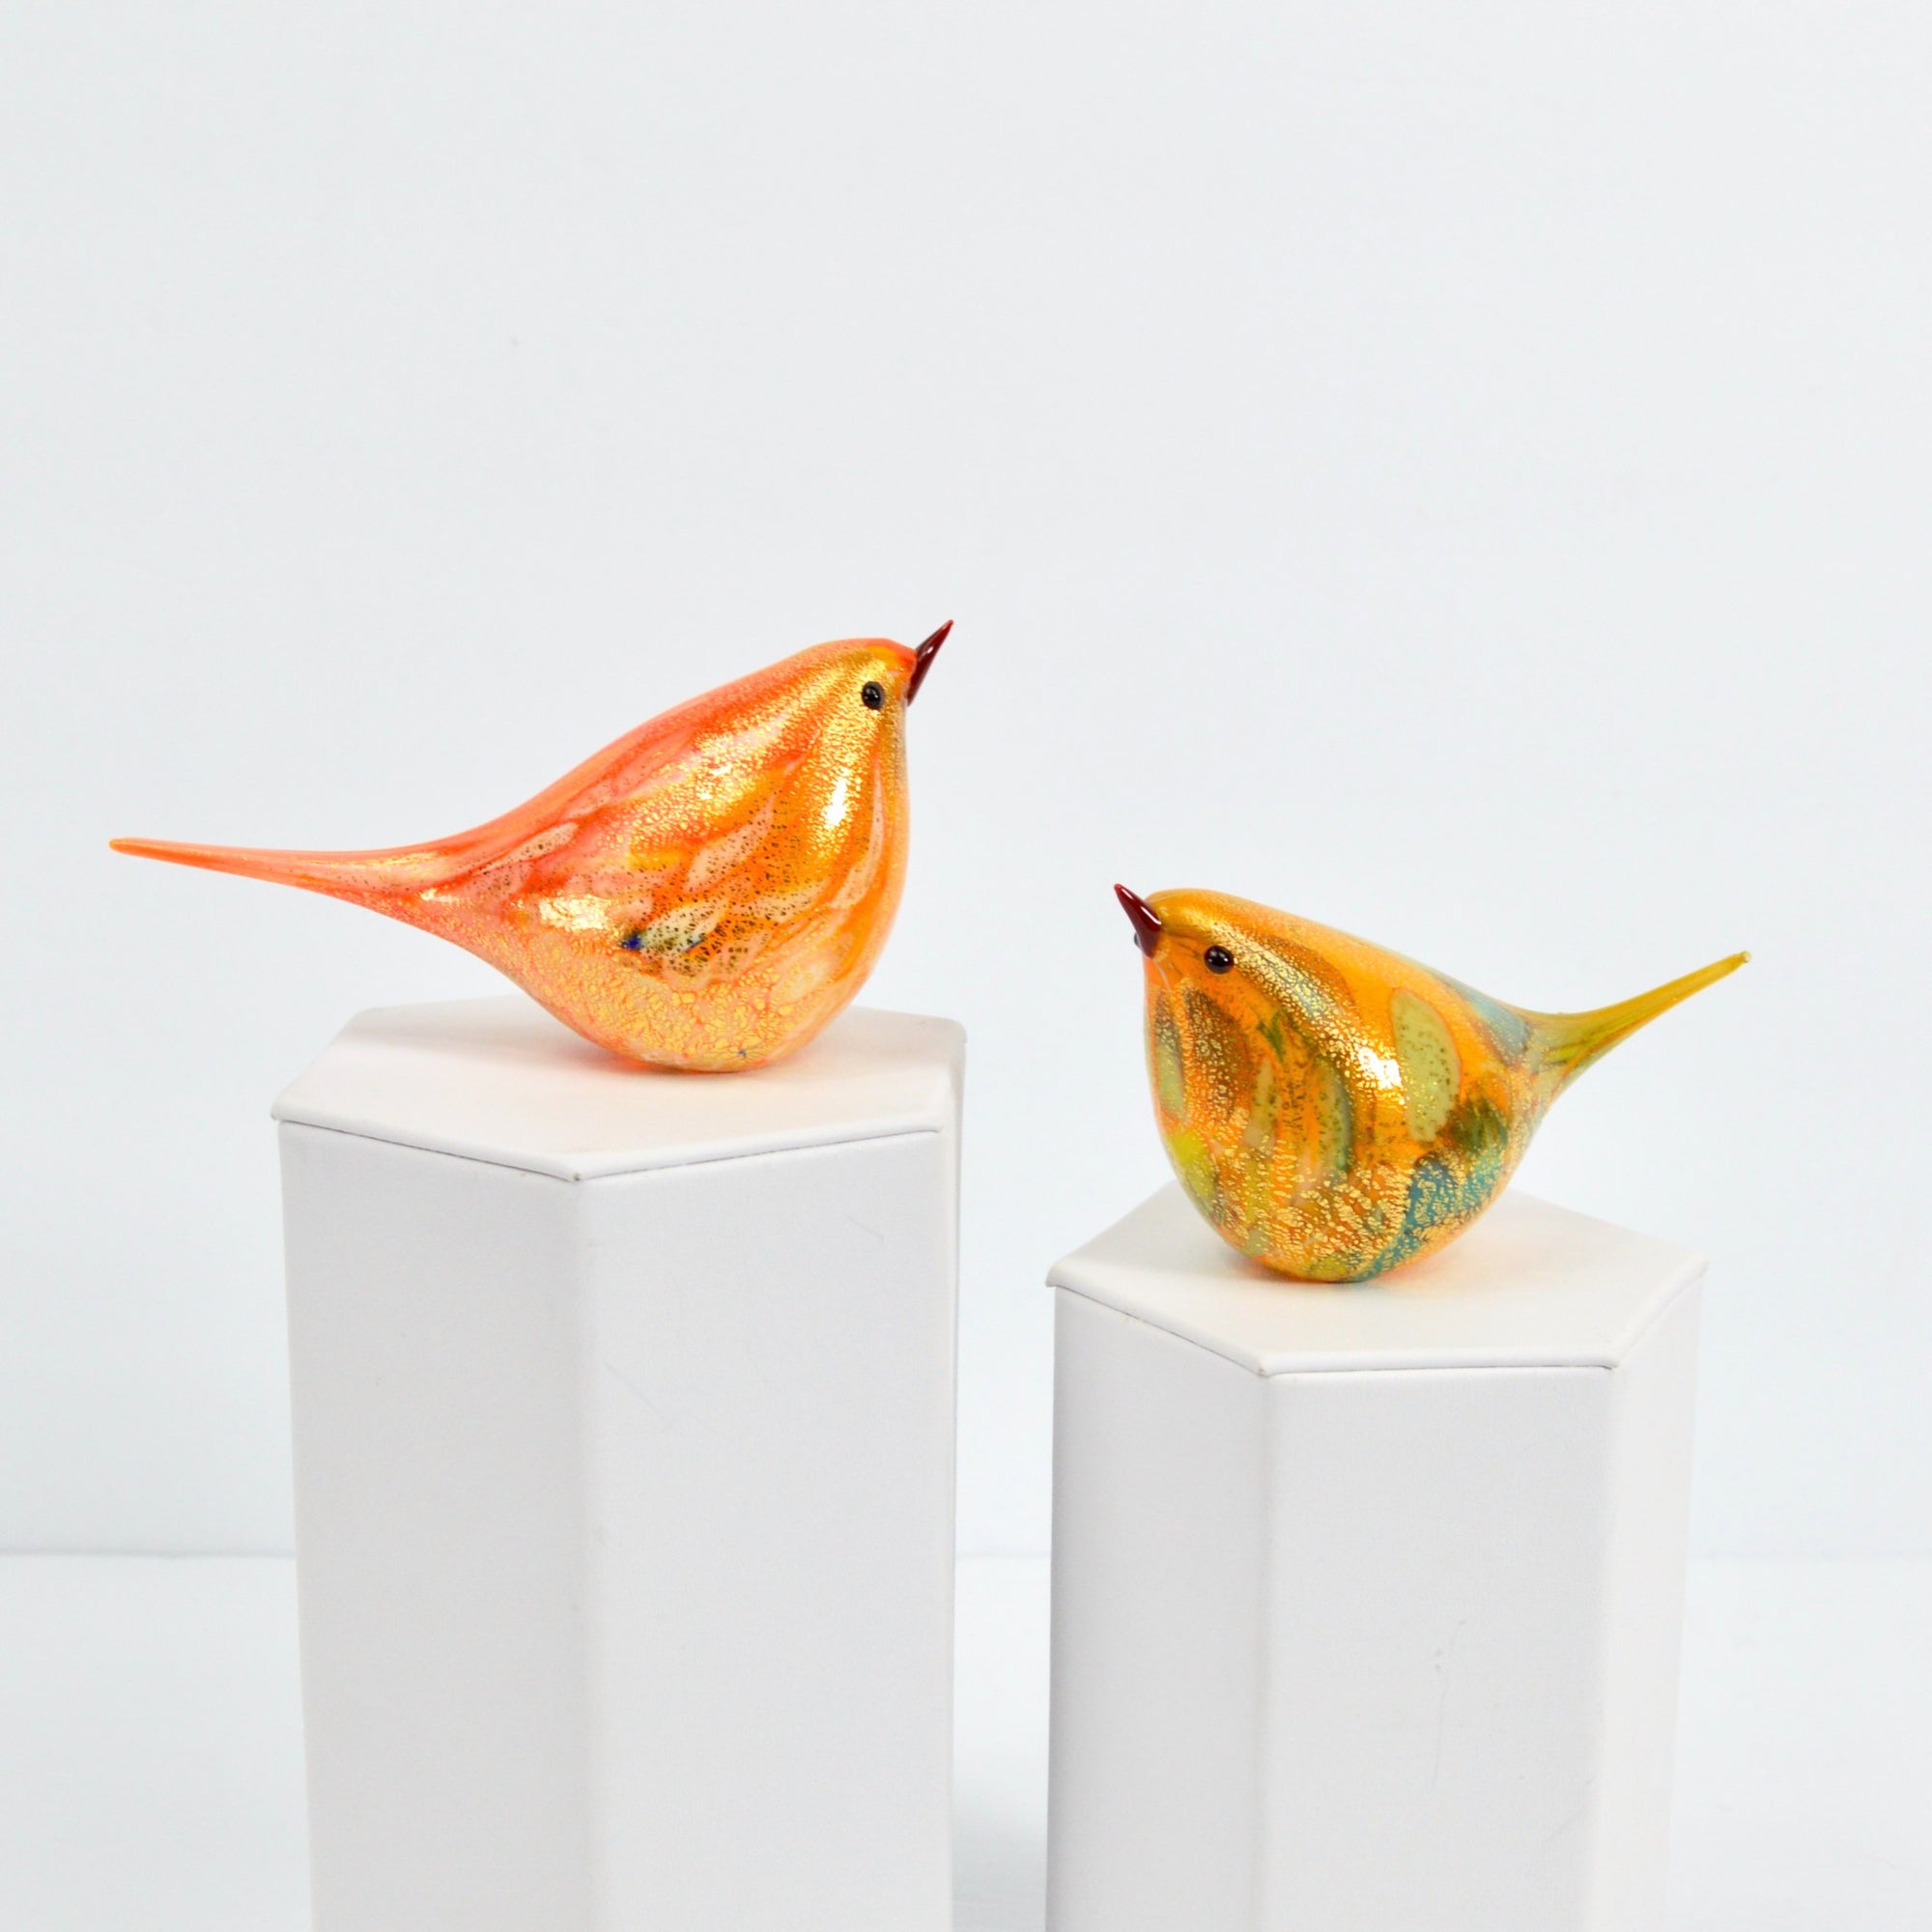 Birds Collection in Murano glass artistic handmade